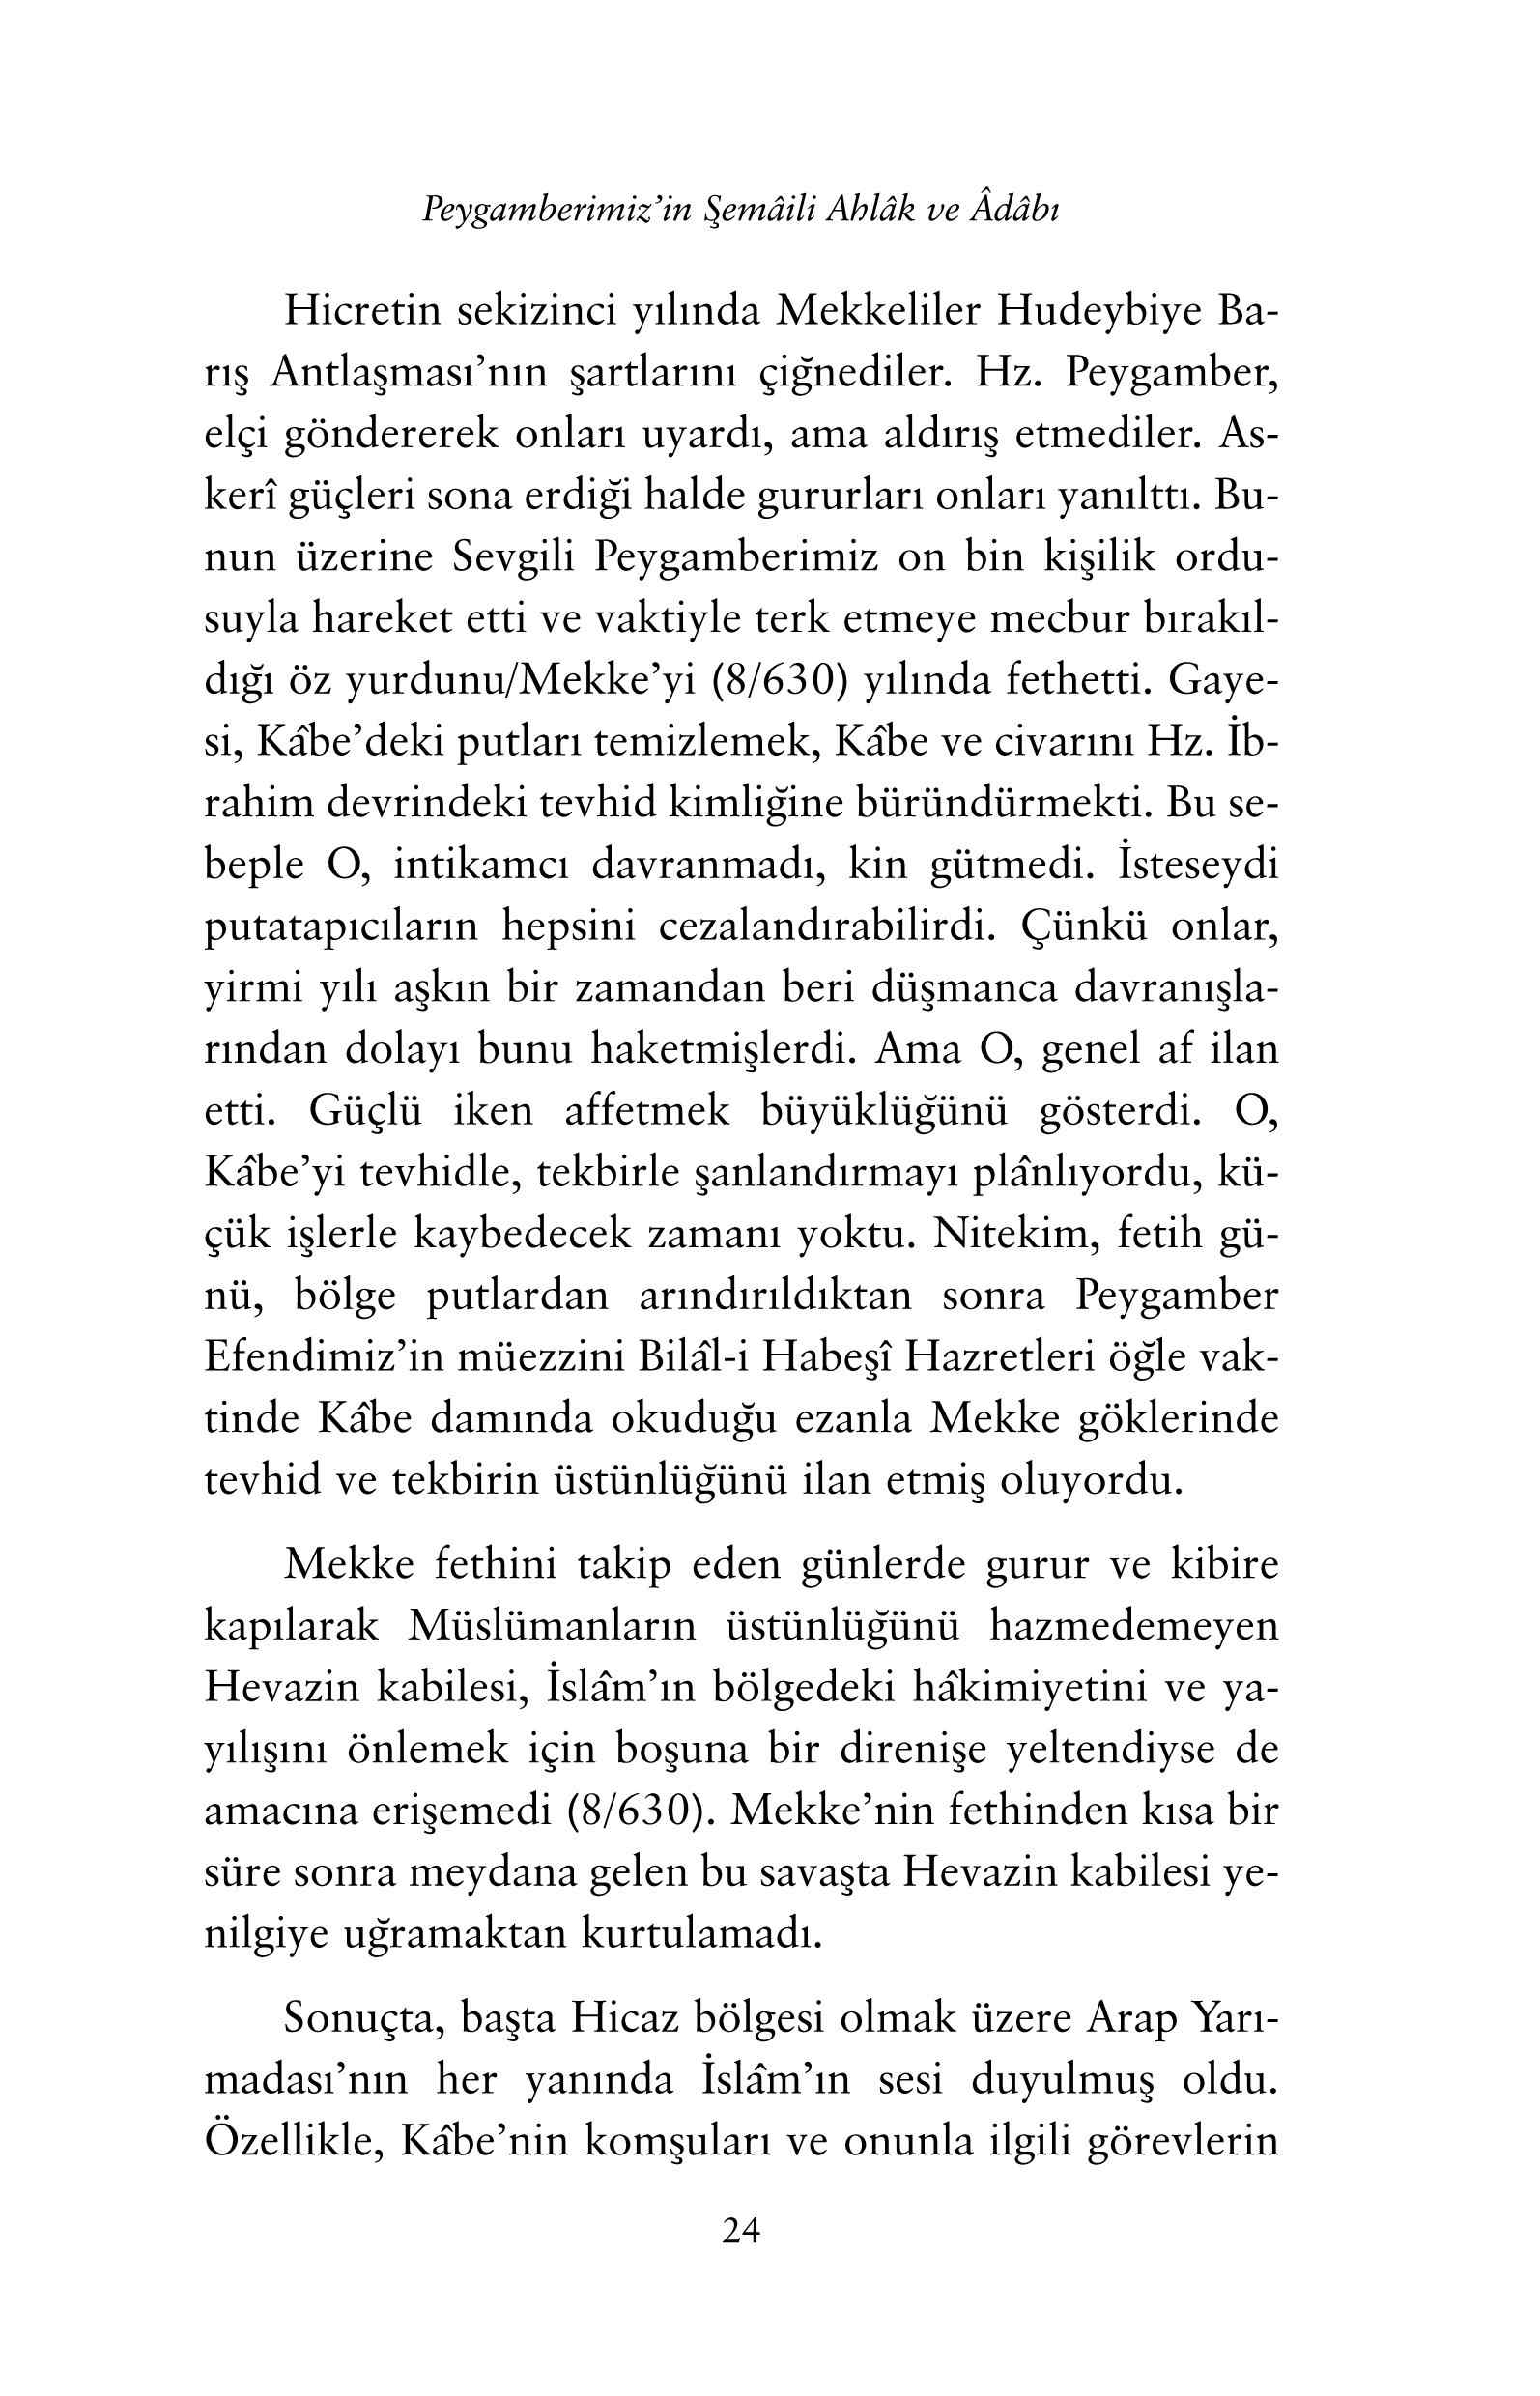 Huseyin algul - Peygamberimizin SAV Semaili Ahlak ve Adabi - IsikYayinlari.pdf, 200-Sayfa 